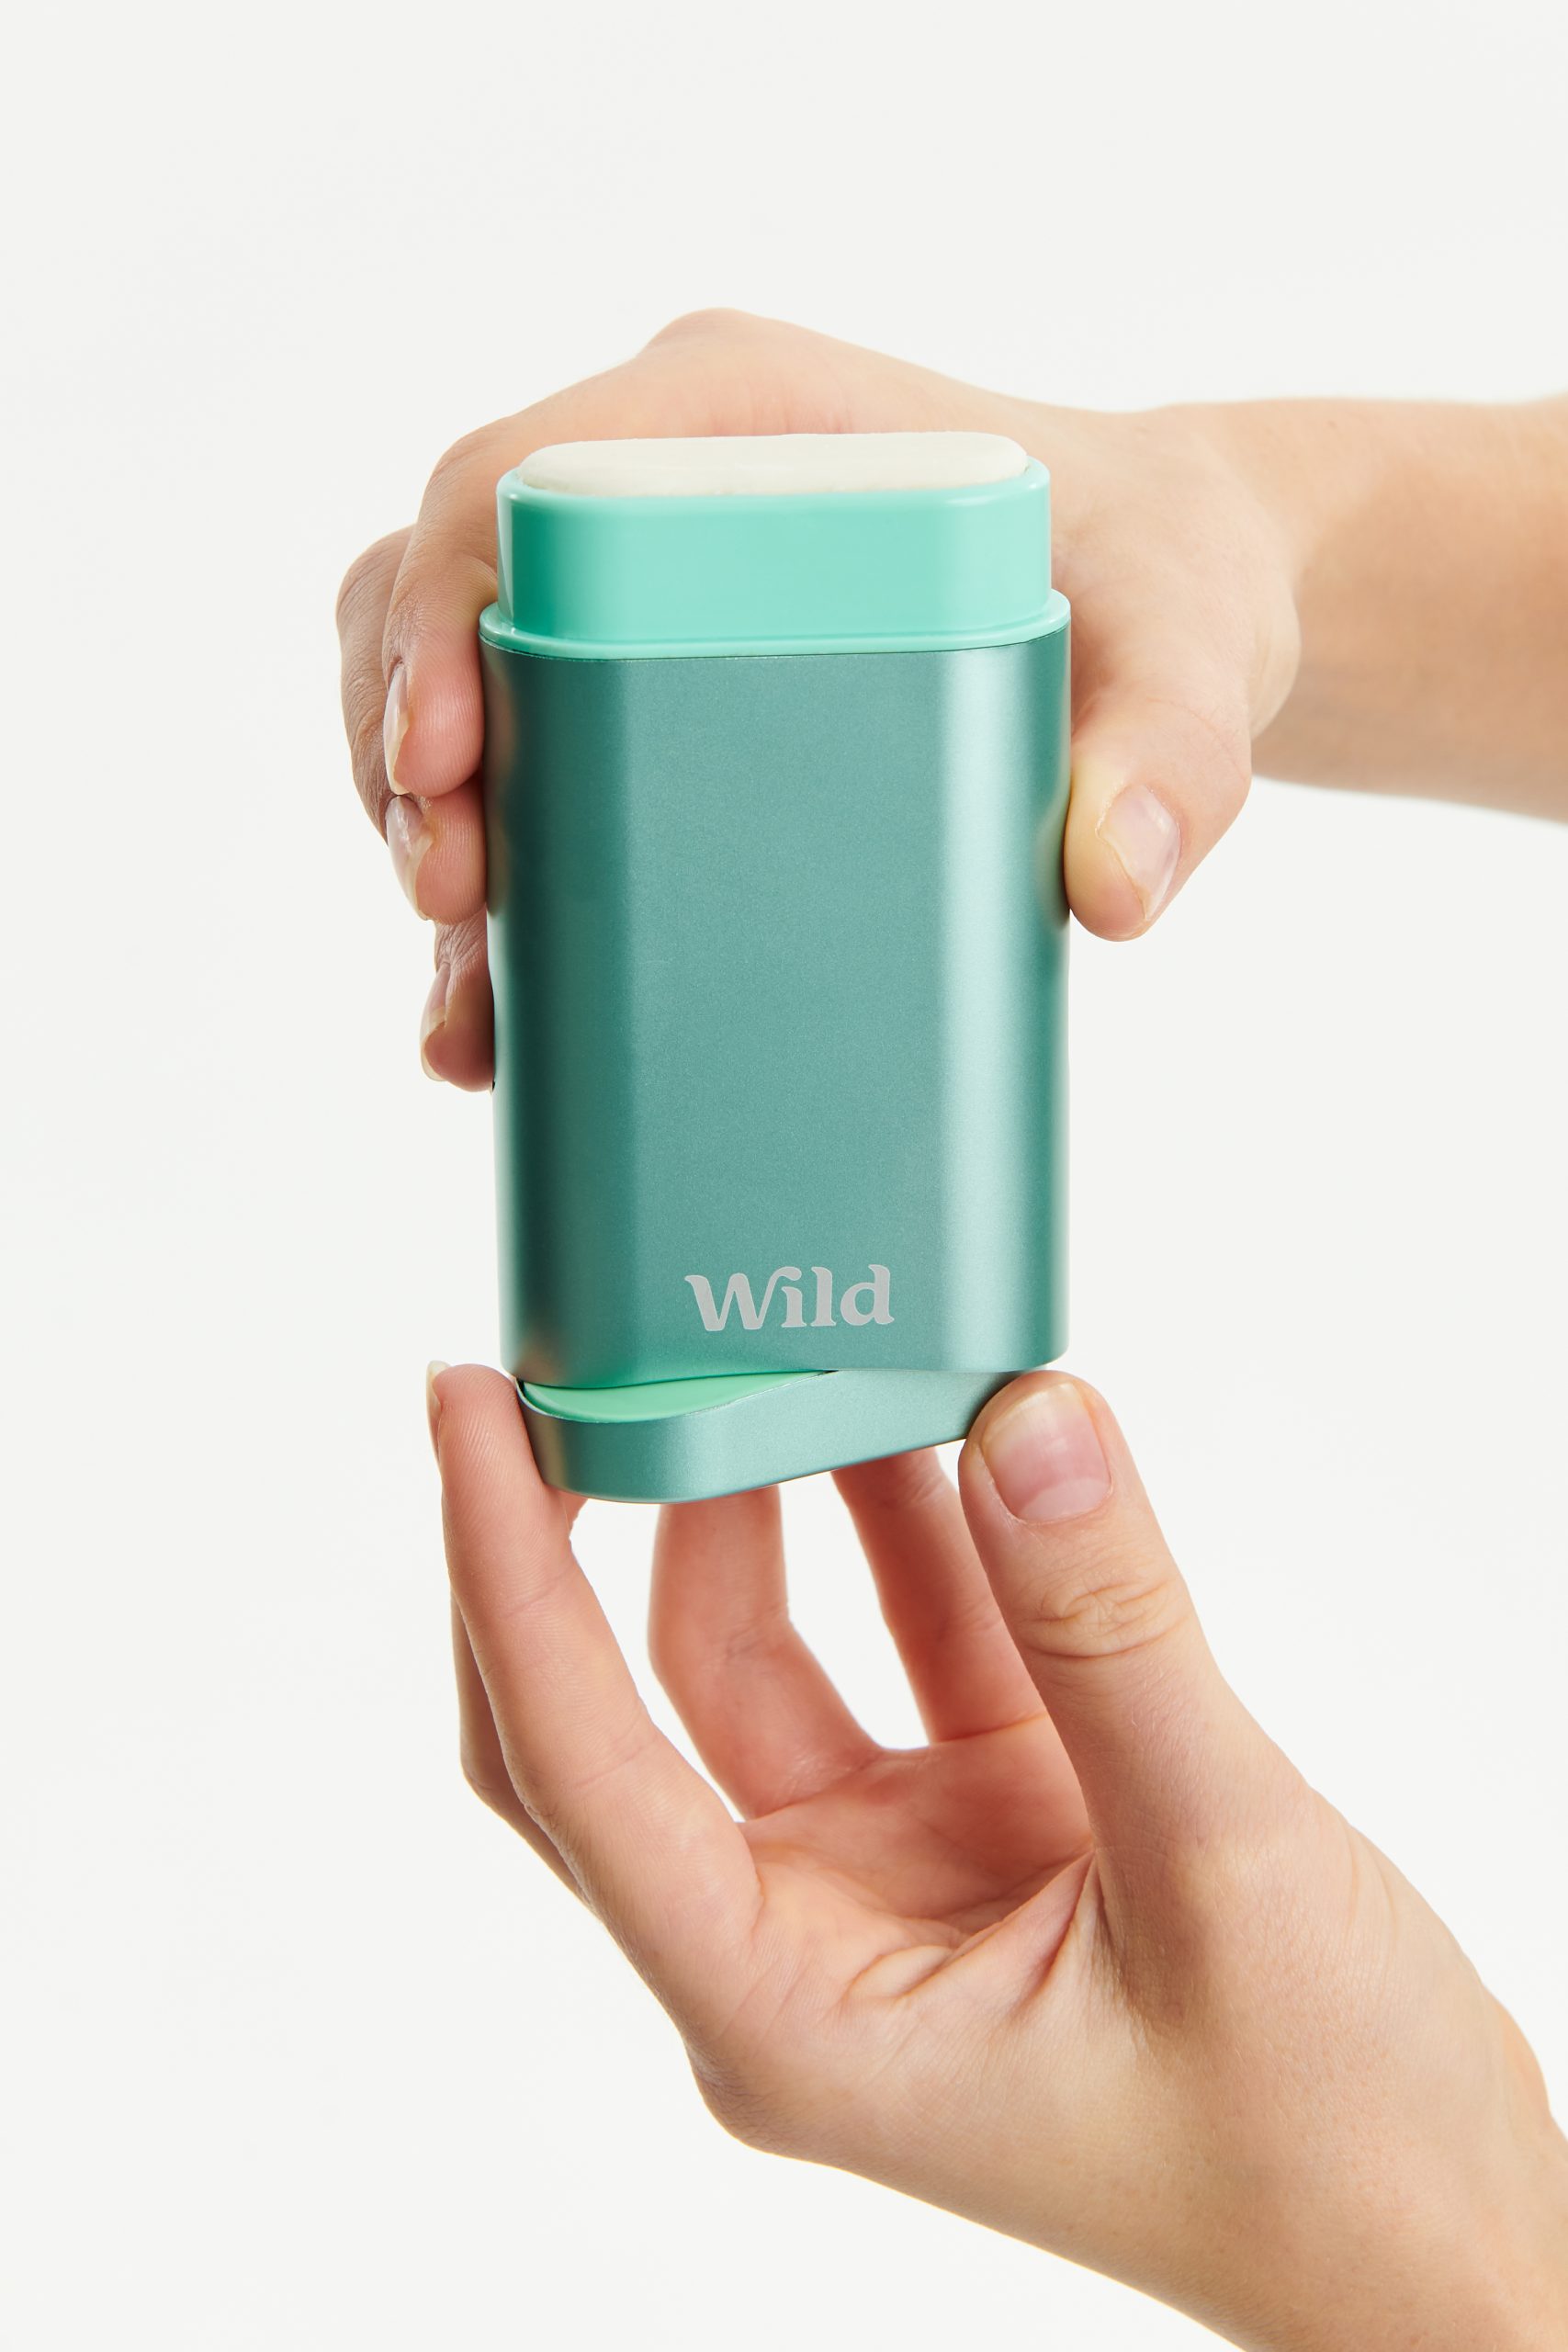 Wild deodorant – Launched by Digital PR Agency 10 Yetis